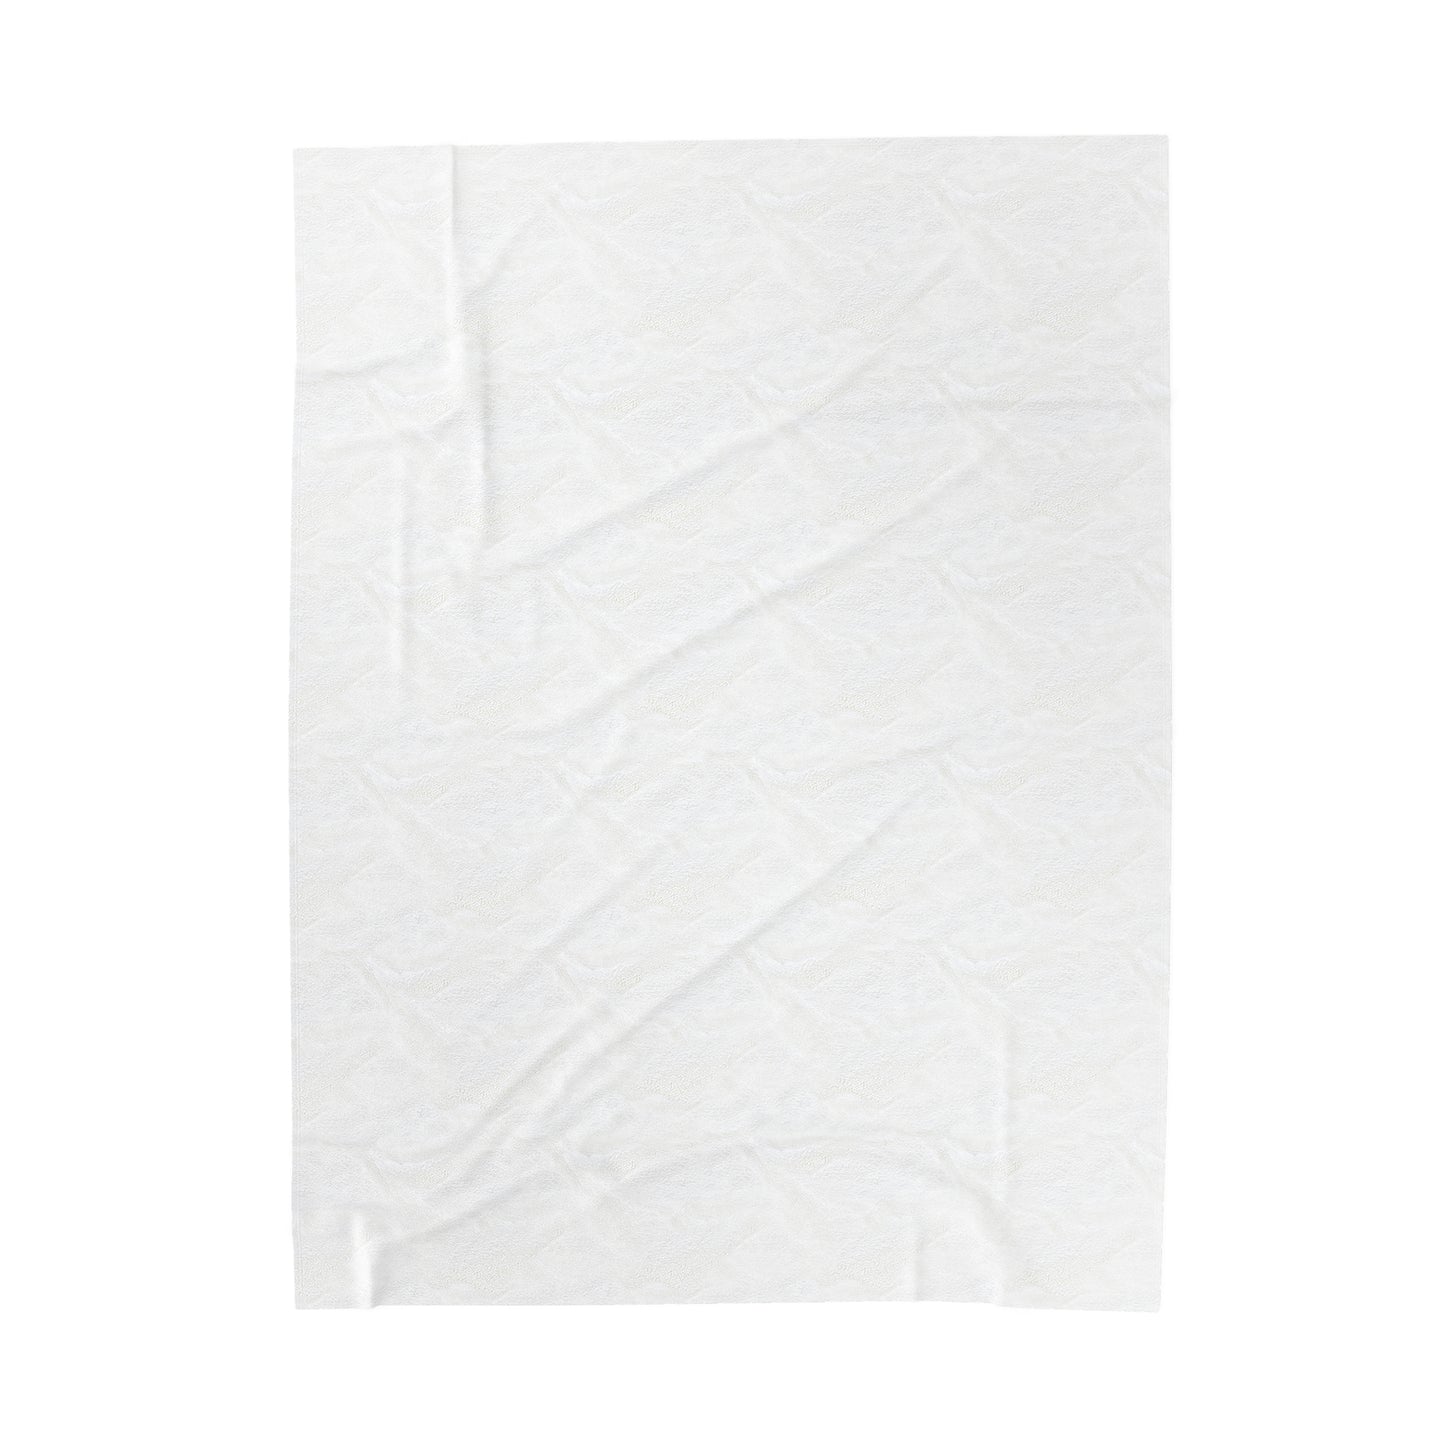 Incredibly Soft Velveteen Blanket- Pikake Wishes (Gray)